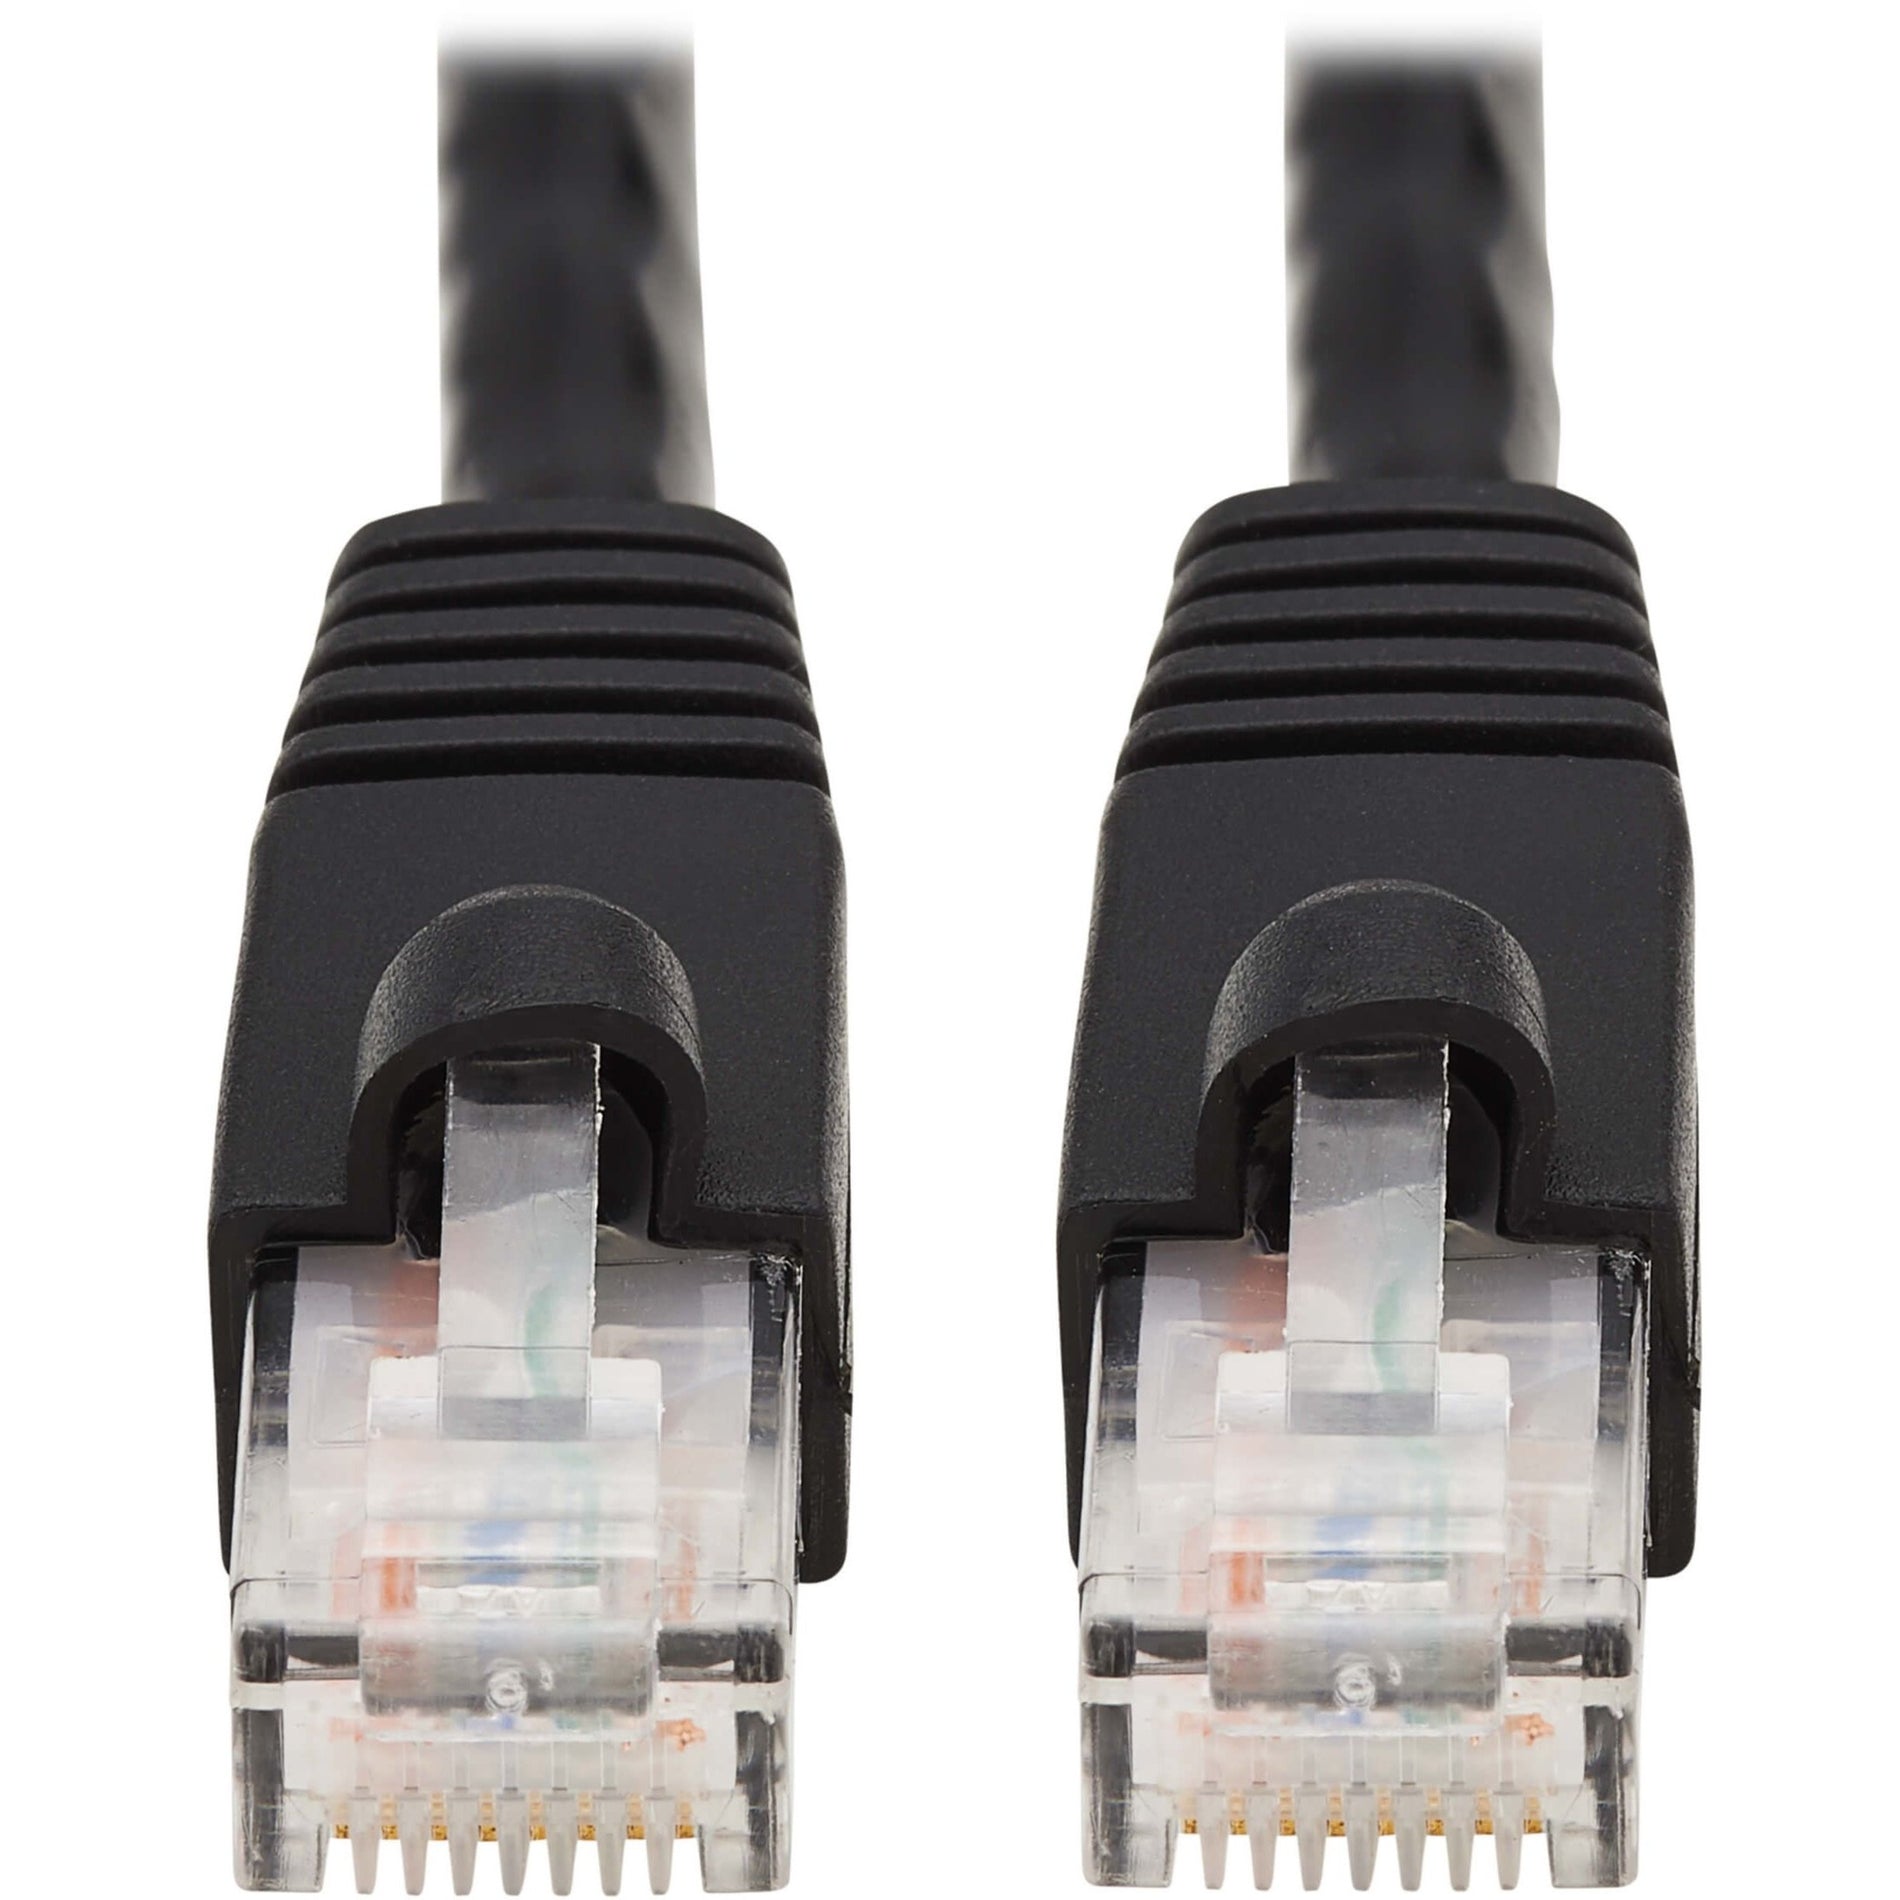 Tripp Lite N261-020-BK Cat.6a Patch Network Cable, 20 ft, 10 Gbit/s, RJ-45 Male